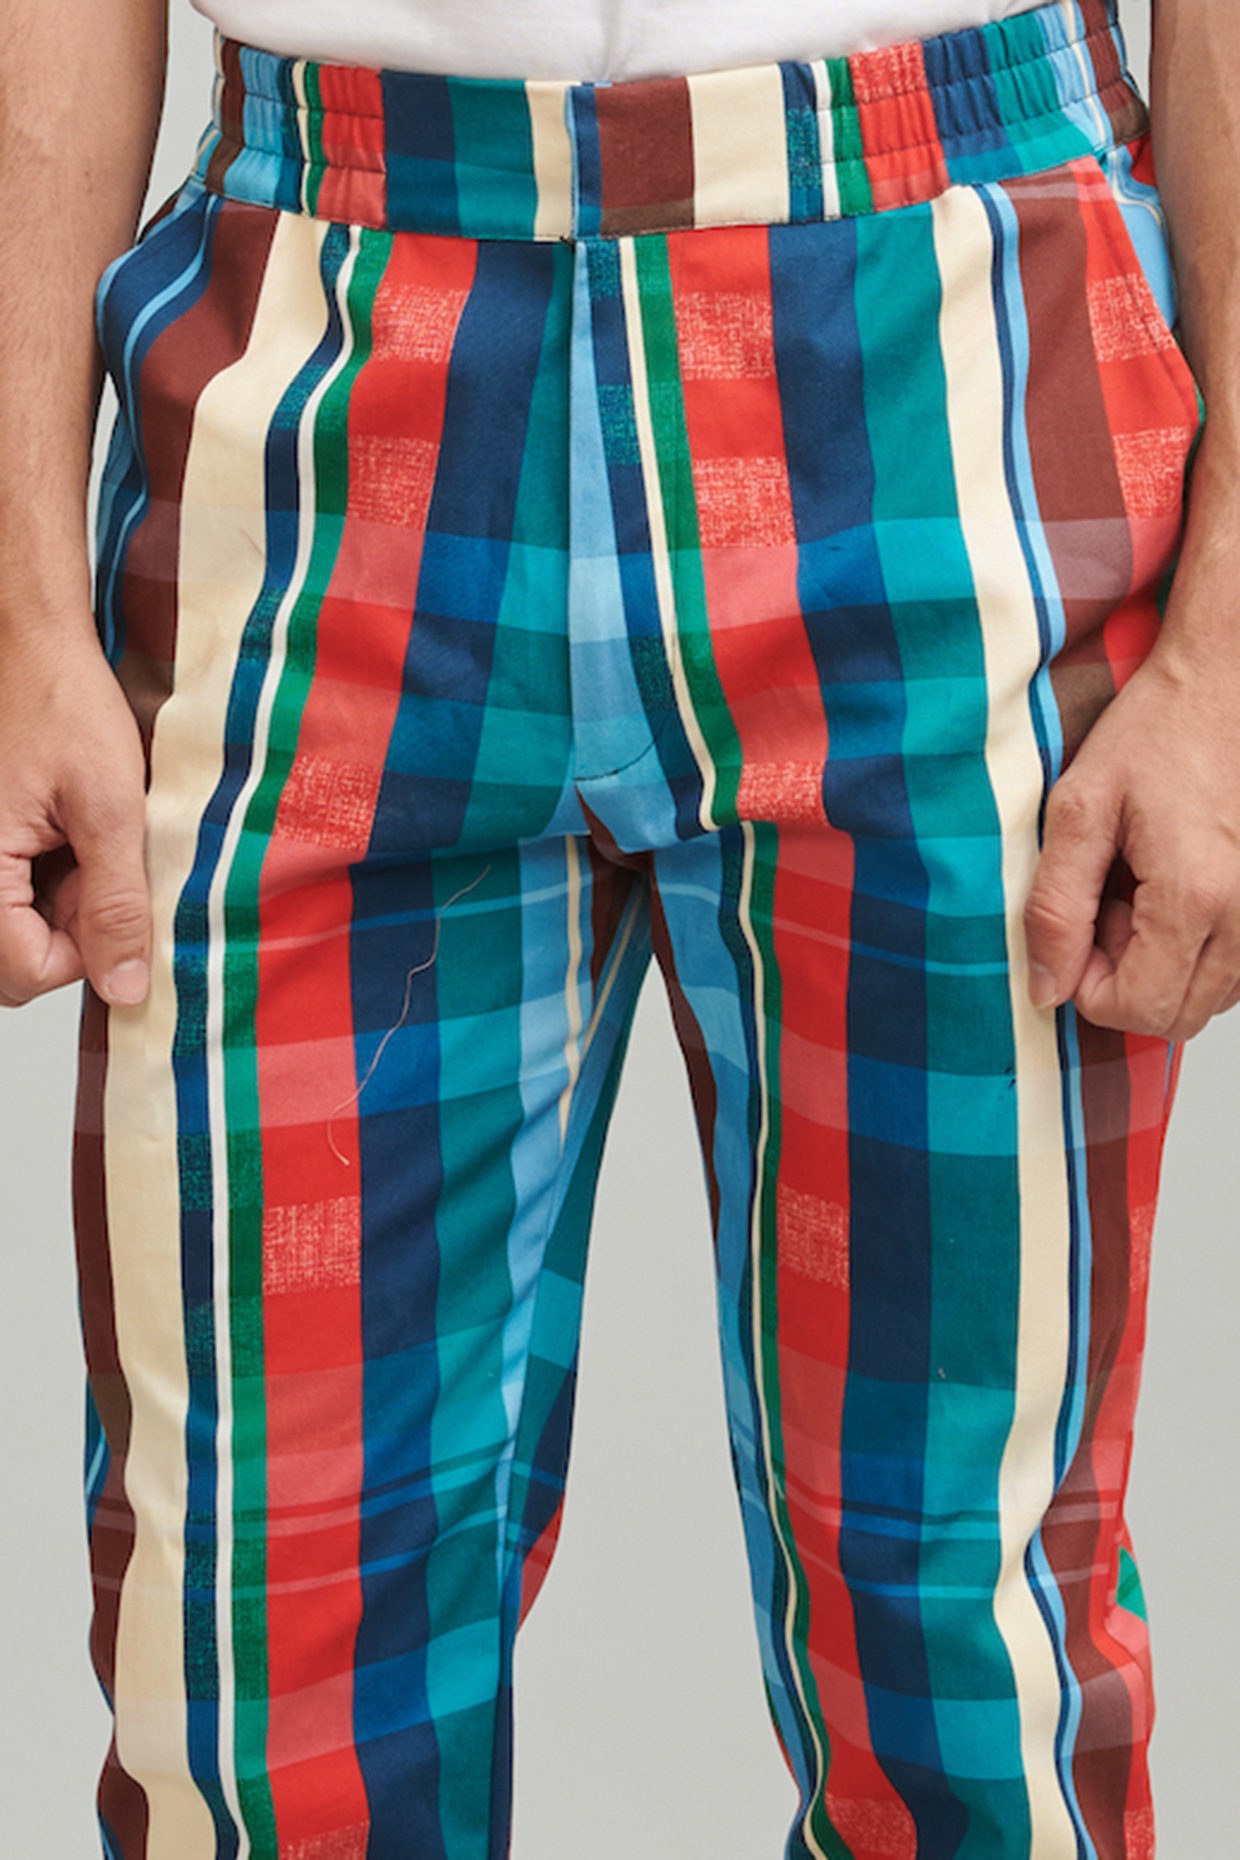 love colourful pants on a man! | Pantalones vino hombre, Moda hombre,  Combinacion de ropa hombre